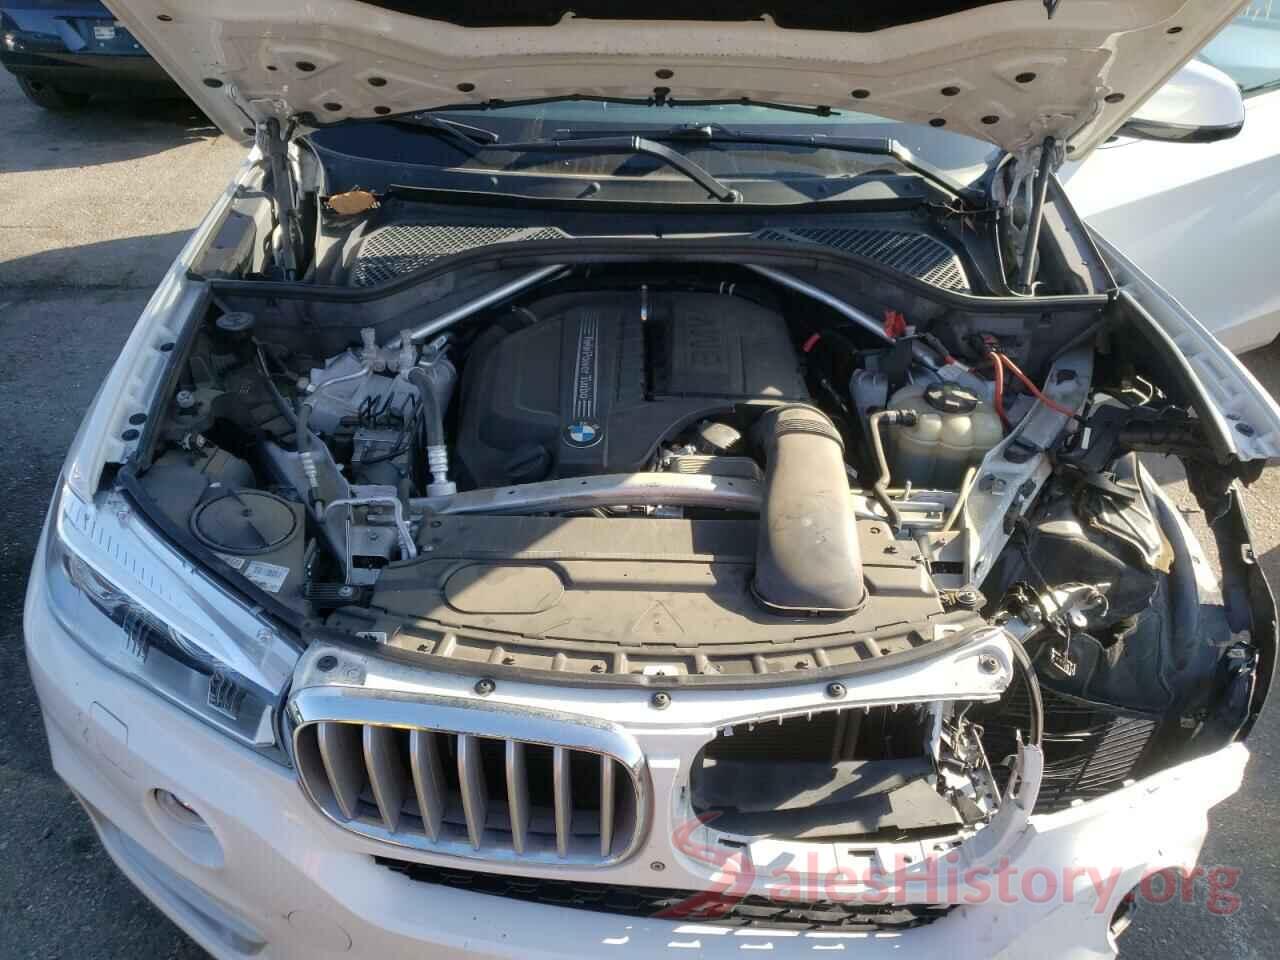 5UXKR0C33H0V69214 2017 BMW X5